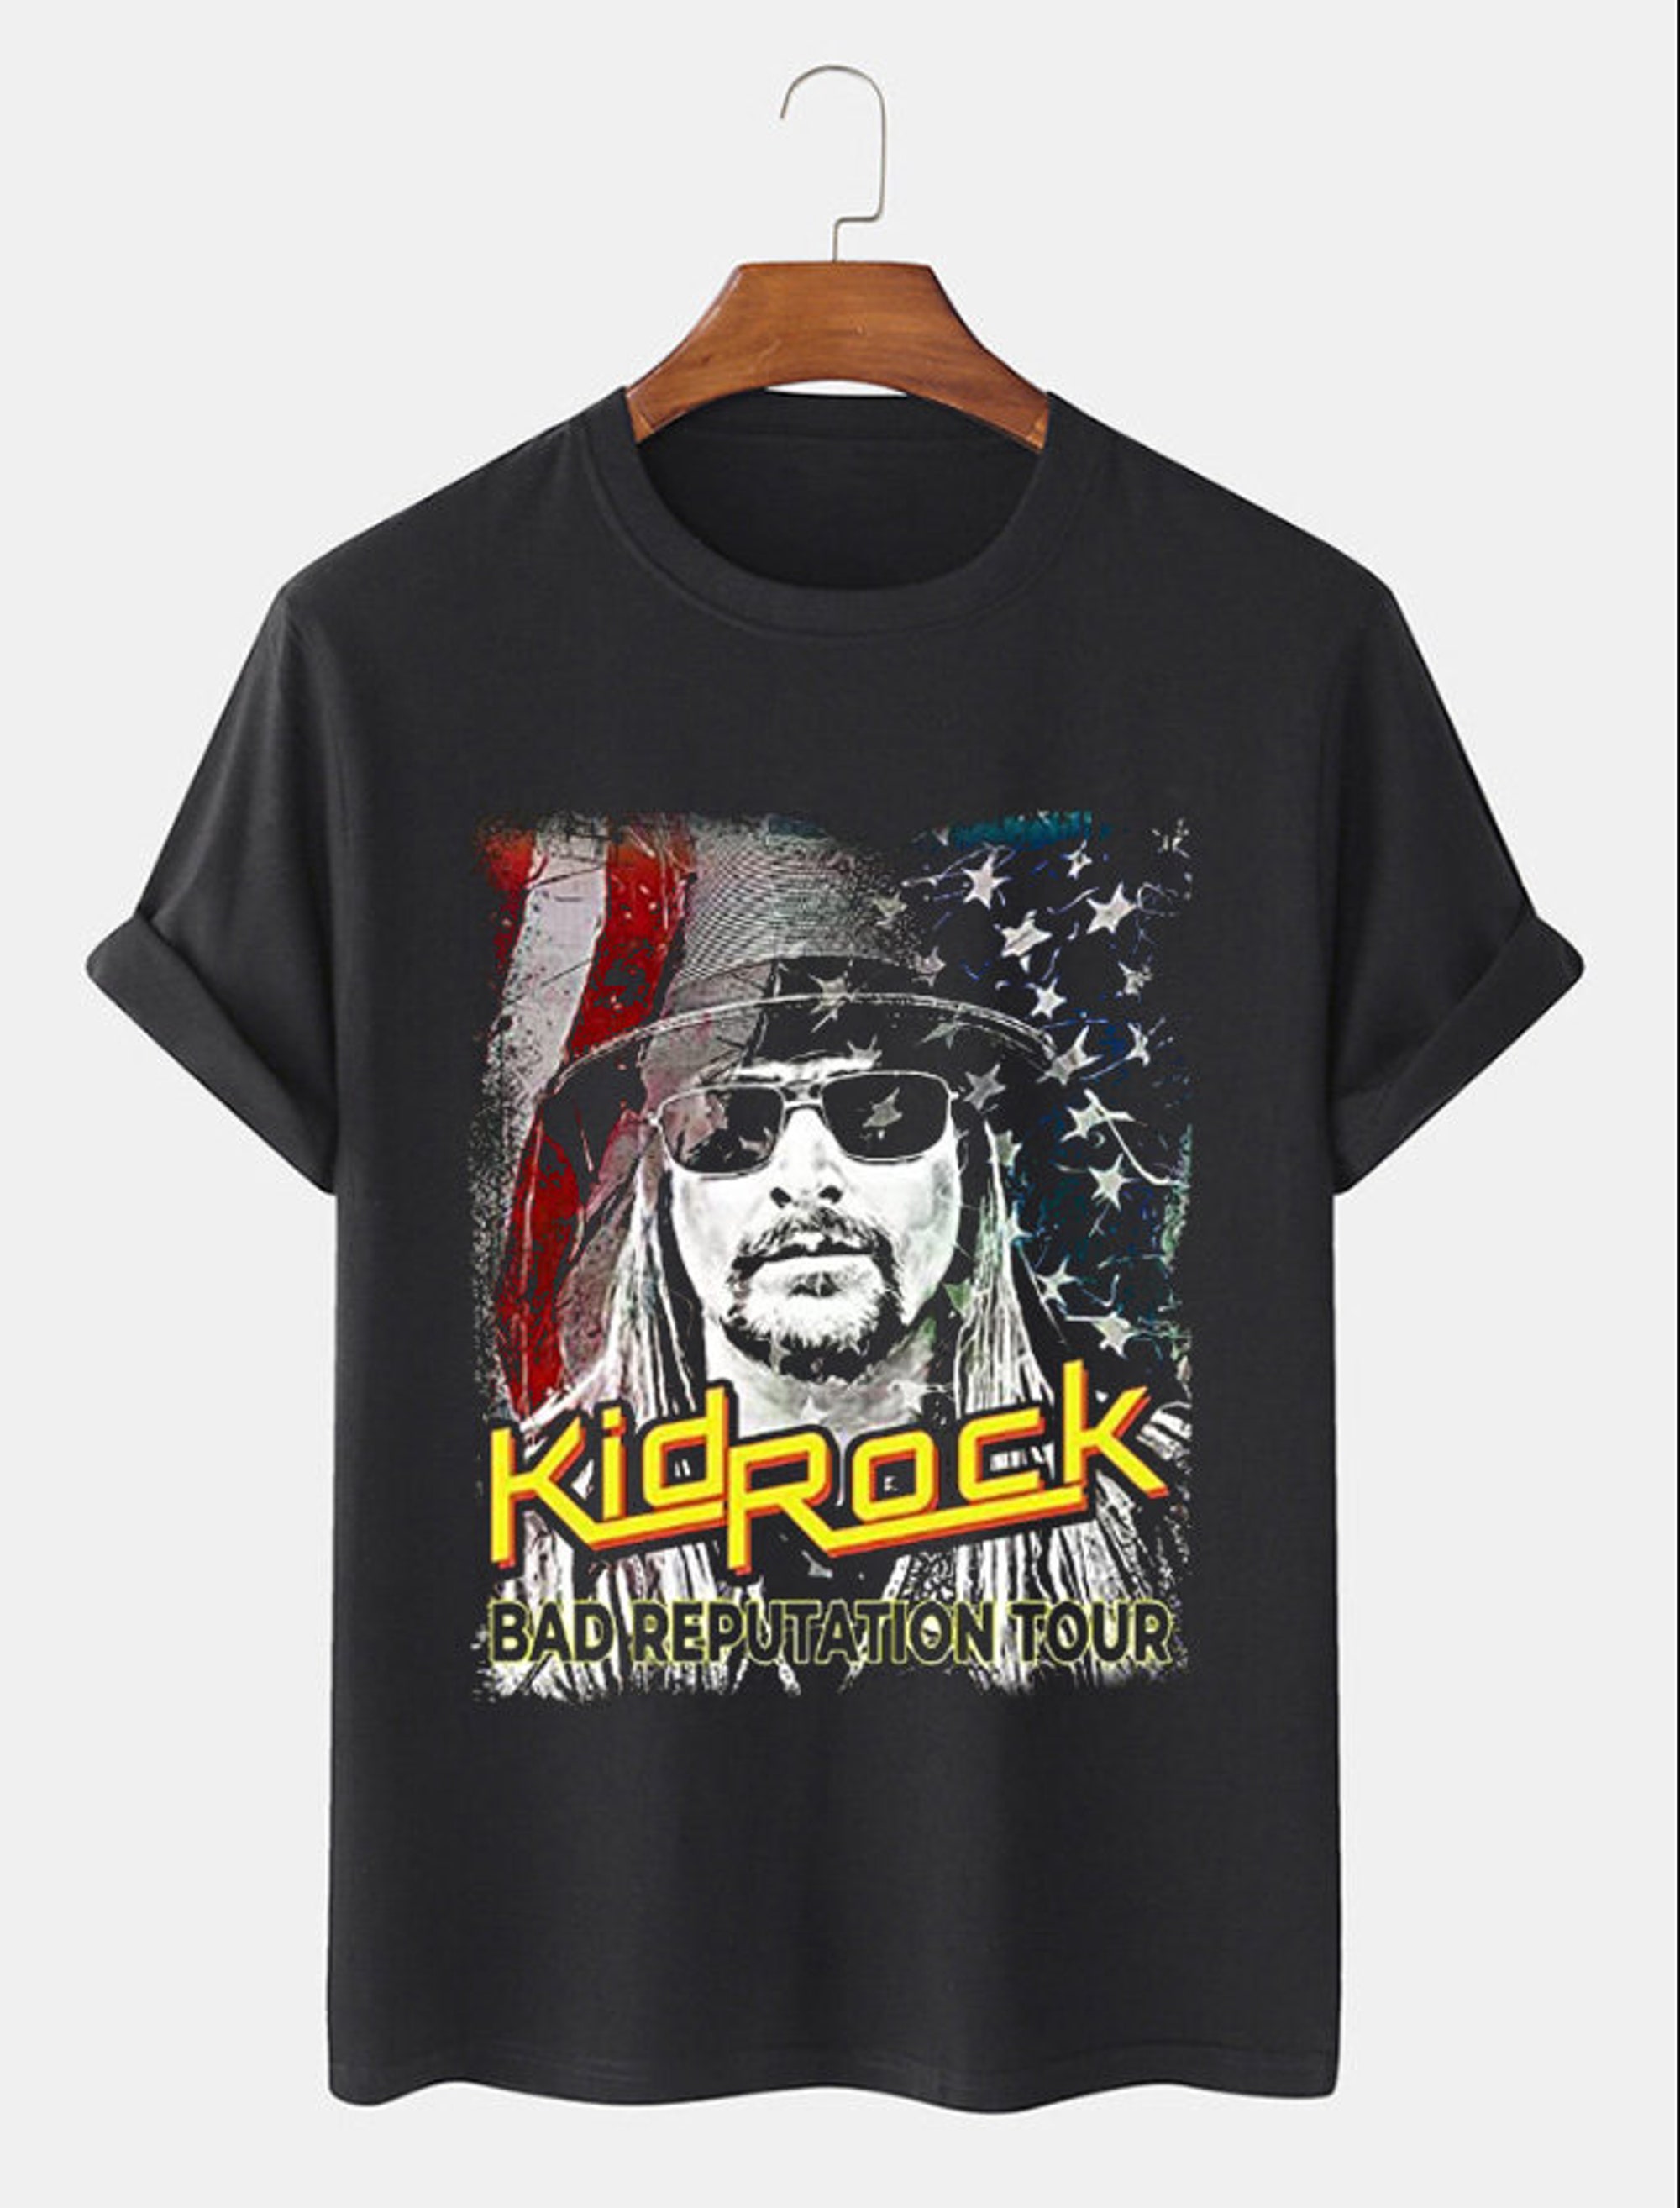 Kid Rock Bad Reputation Tour 2022 T Shirt